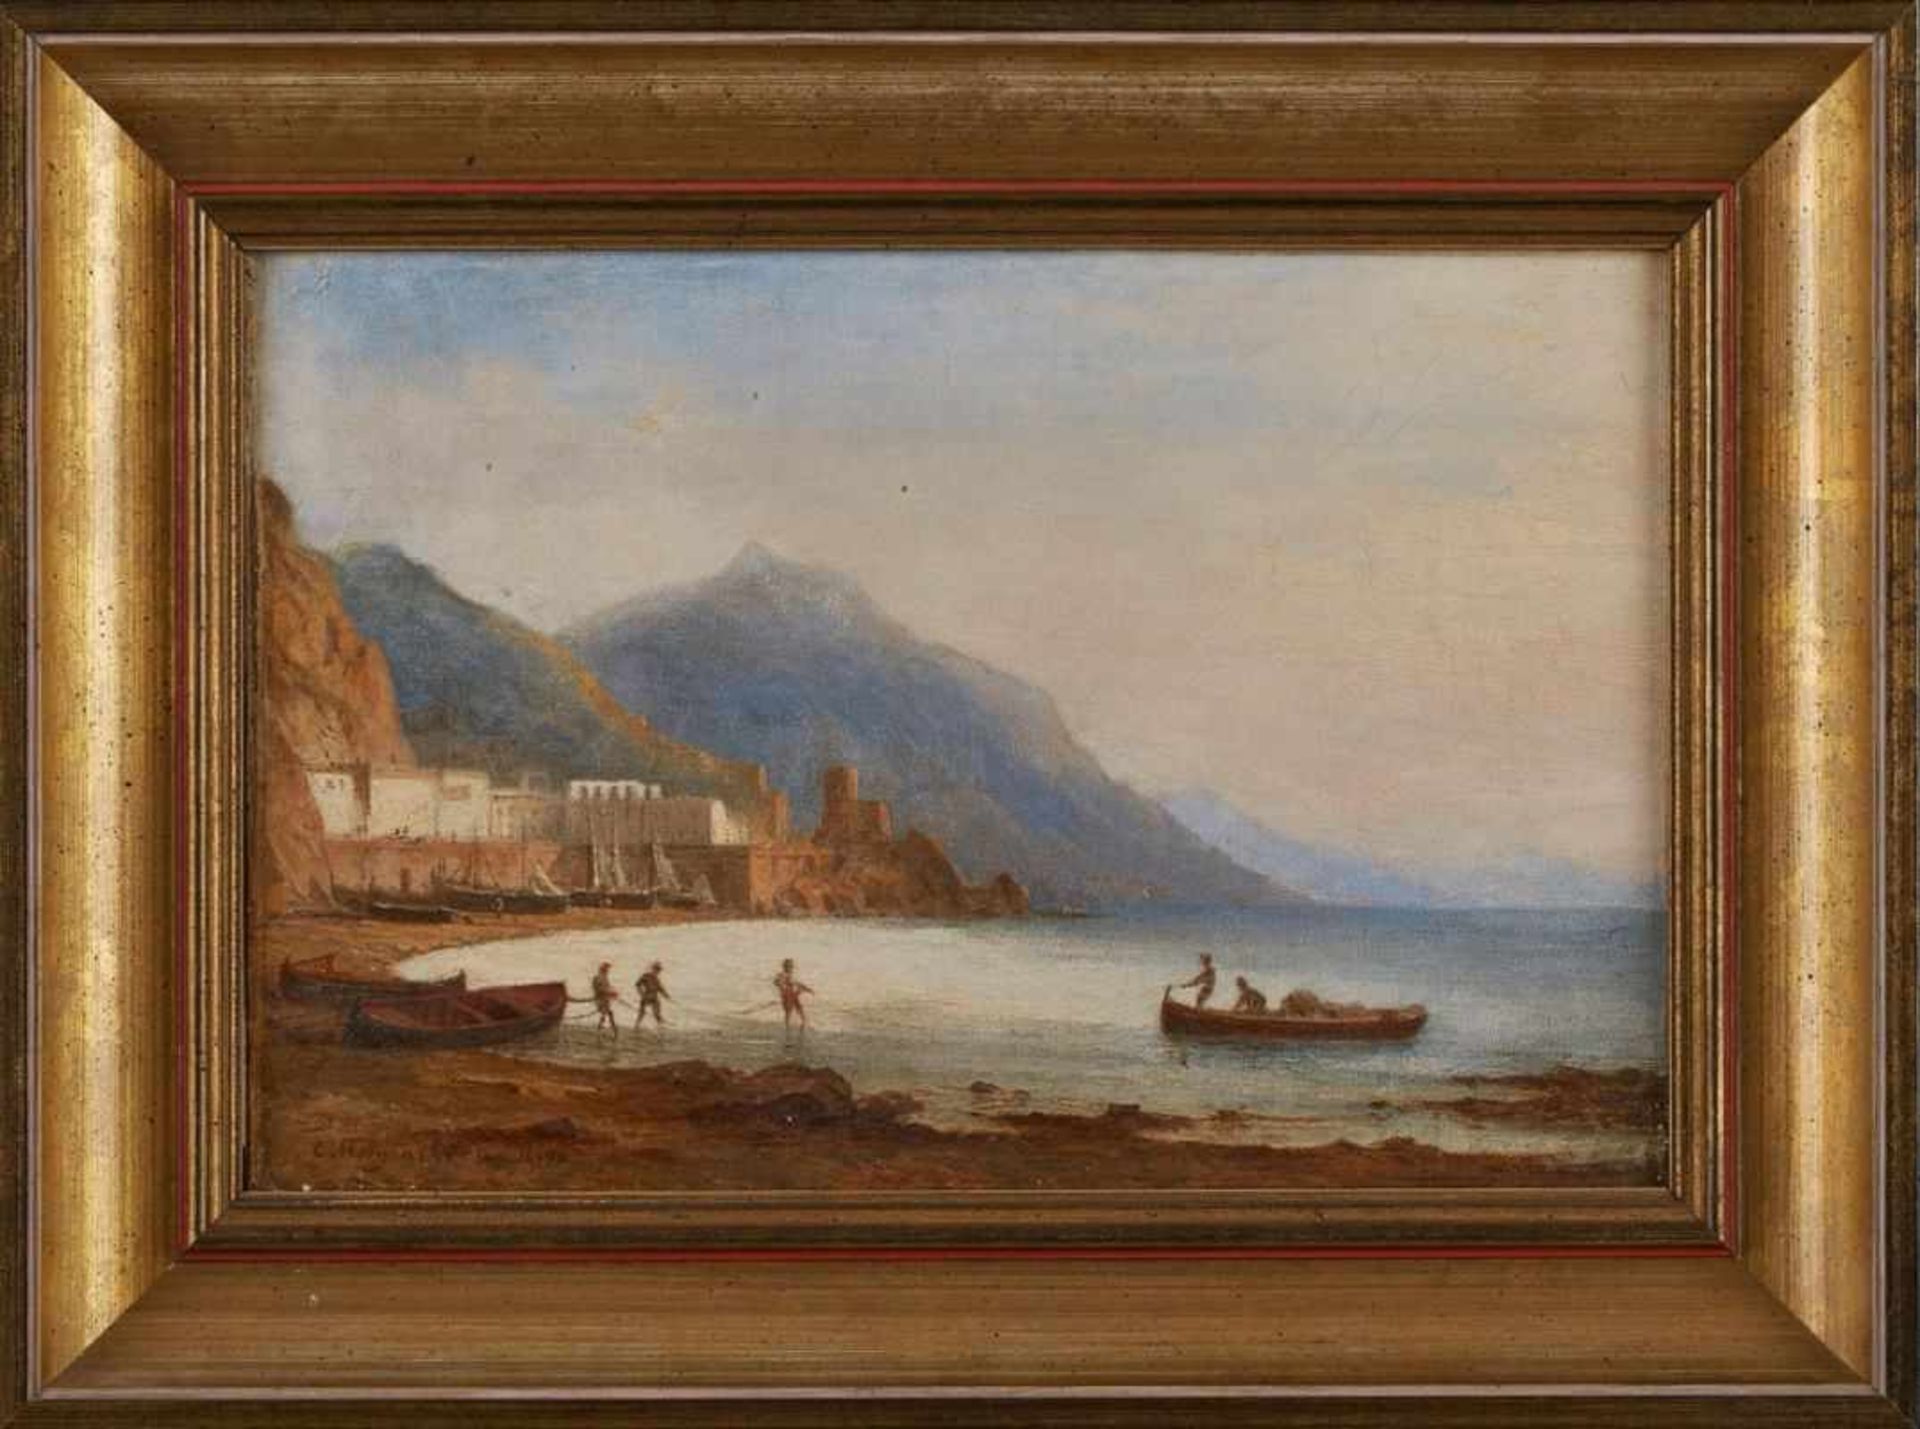 Gemälde Carl Morgenstern 1811 Frankfurt - 1893 Frankfurt Landschaftsmaler. Sohn des Joh. Friedr.,